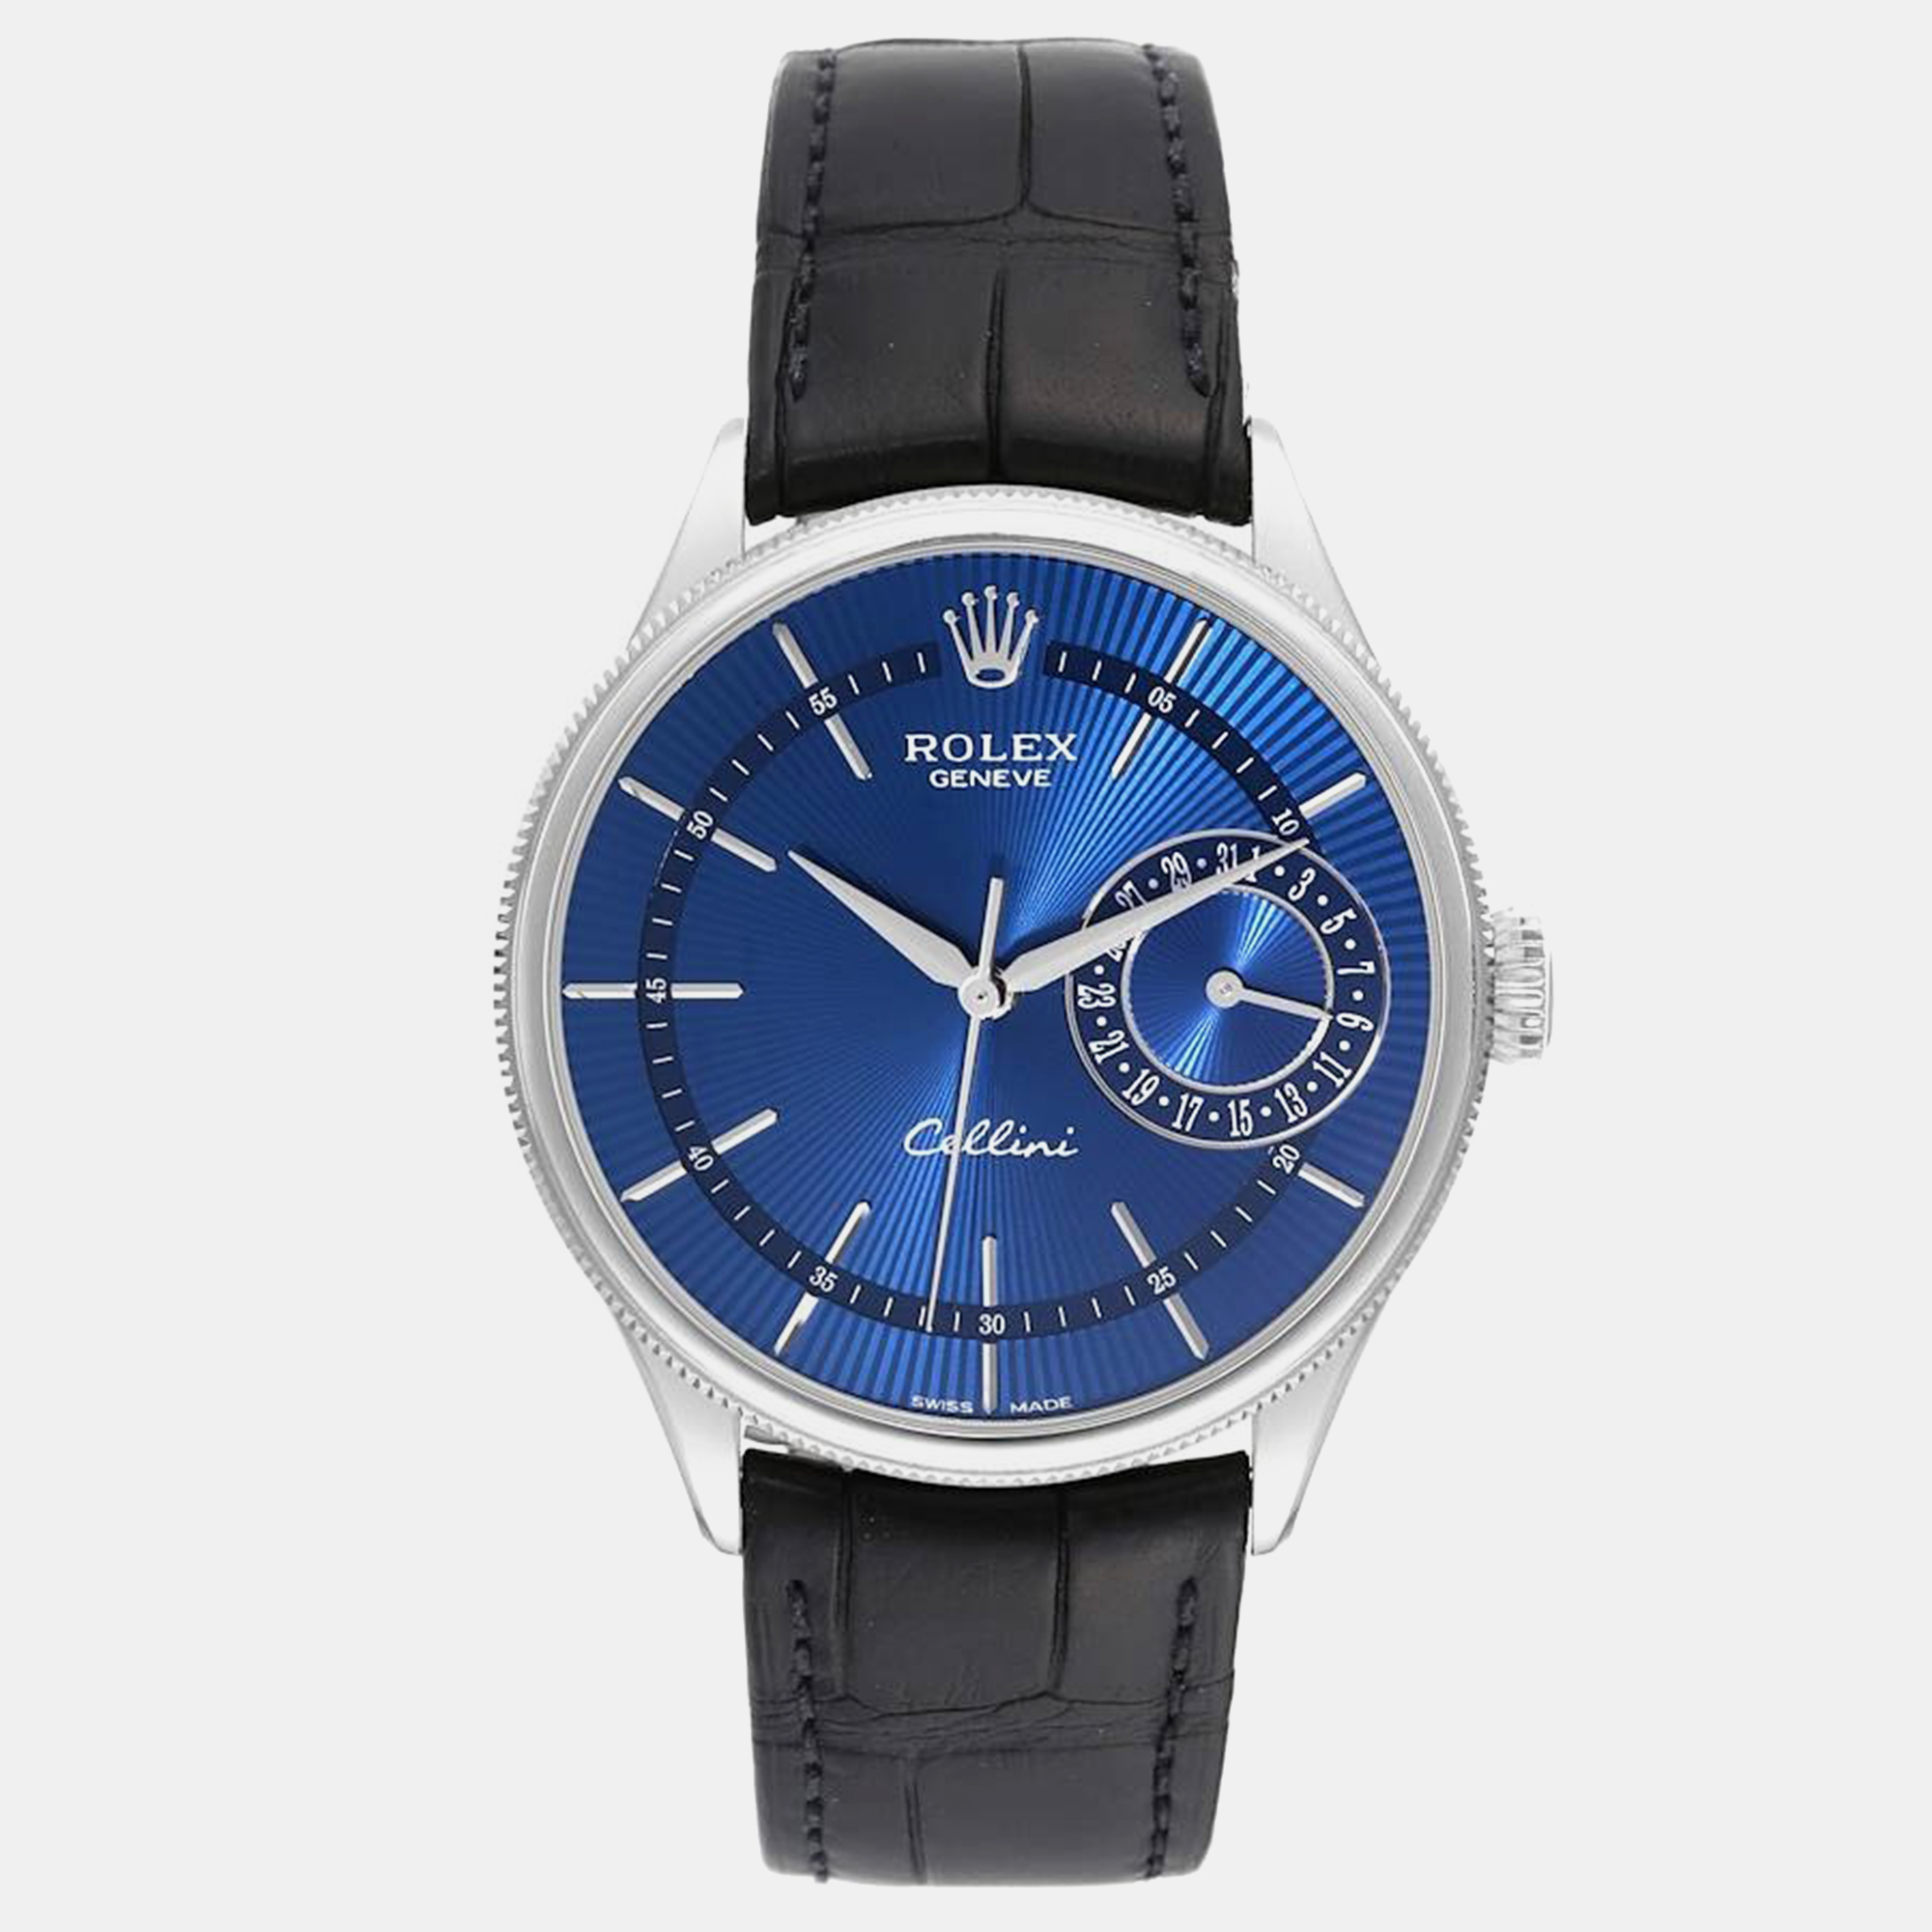 Rolex cellini date white gold blue dial men's watch 39 mm